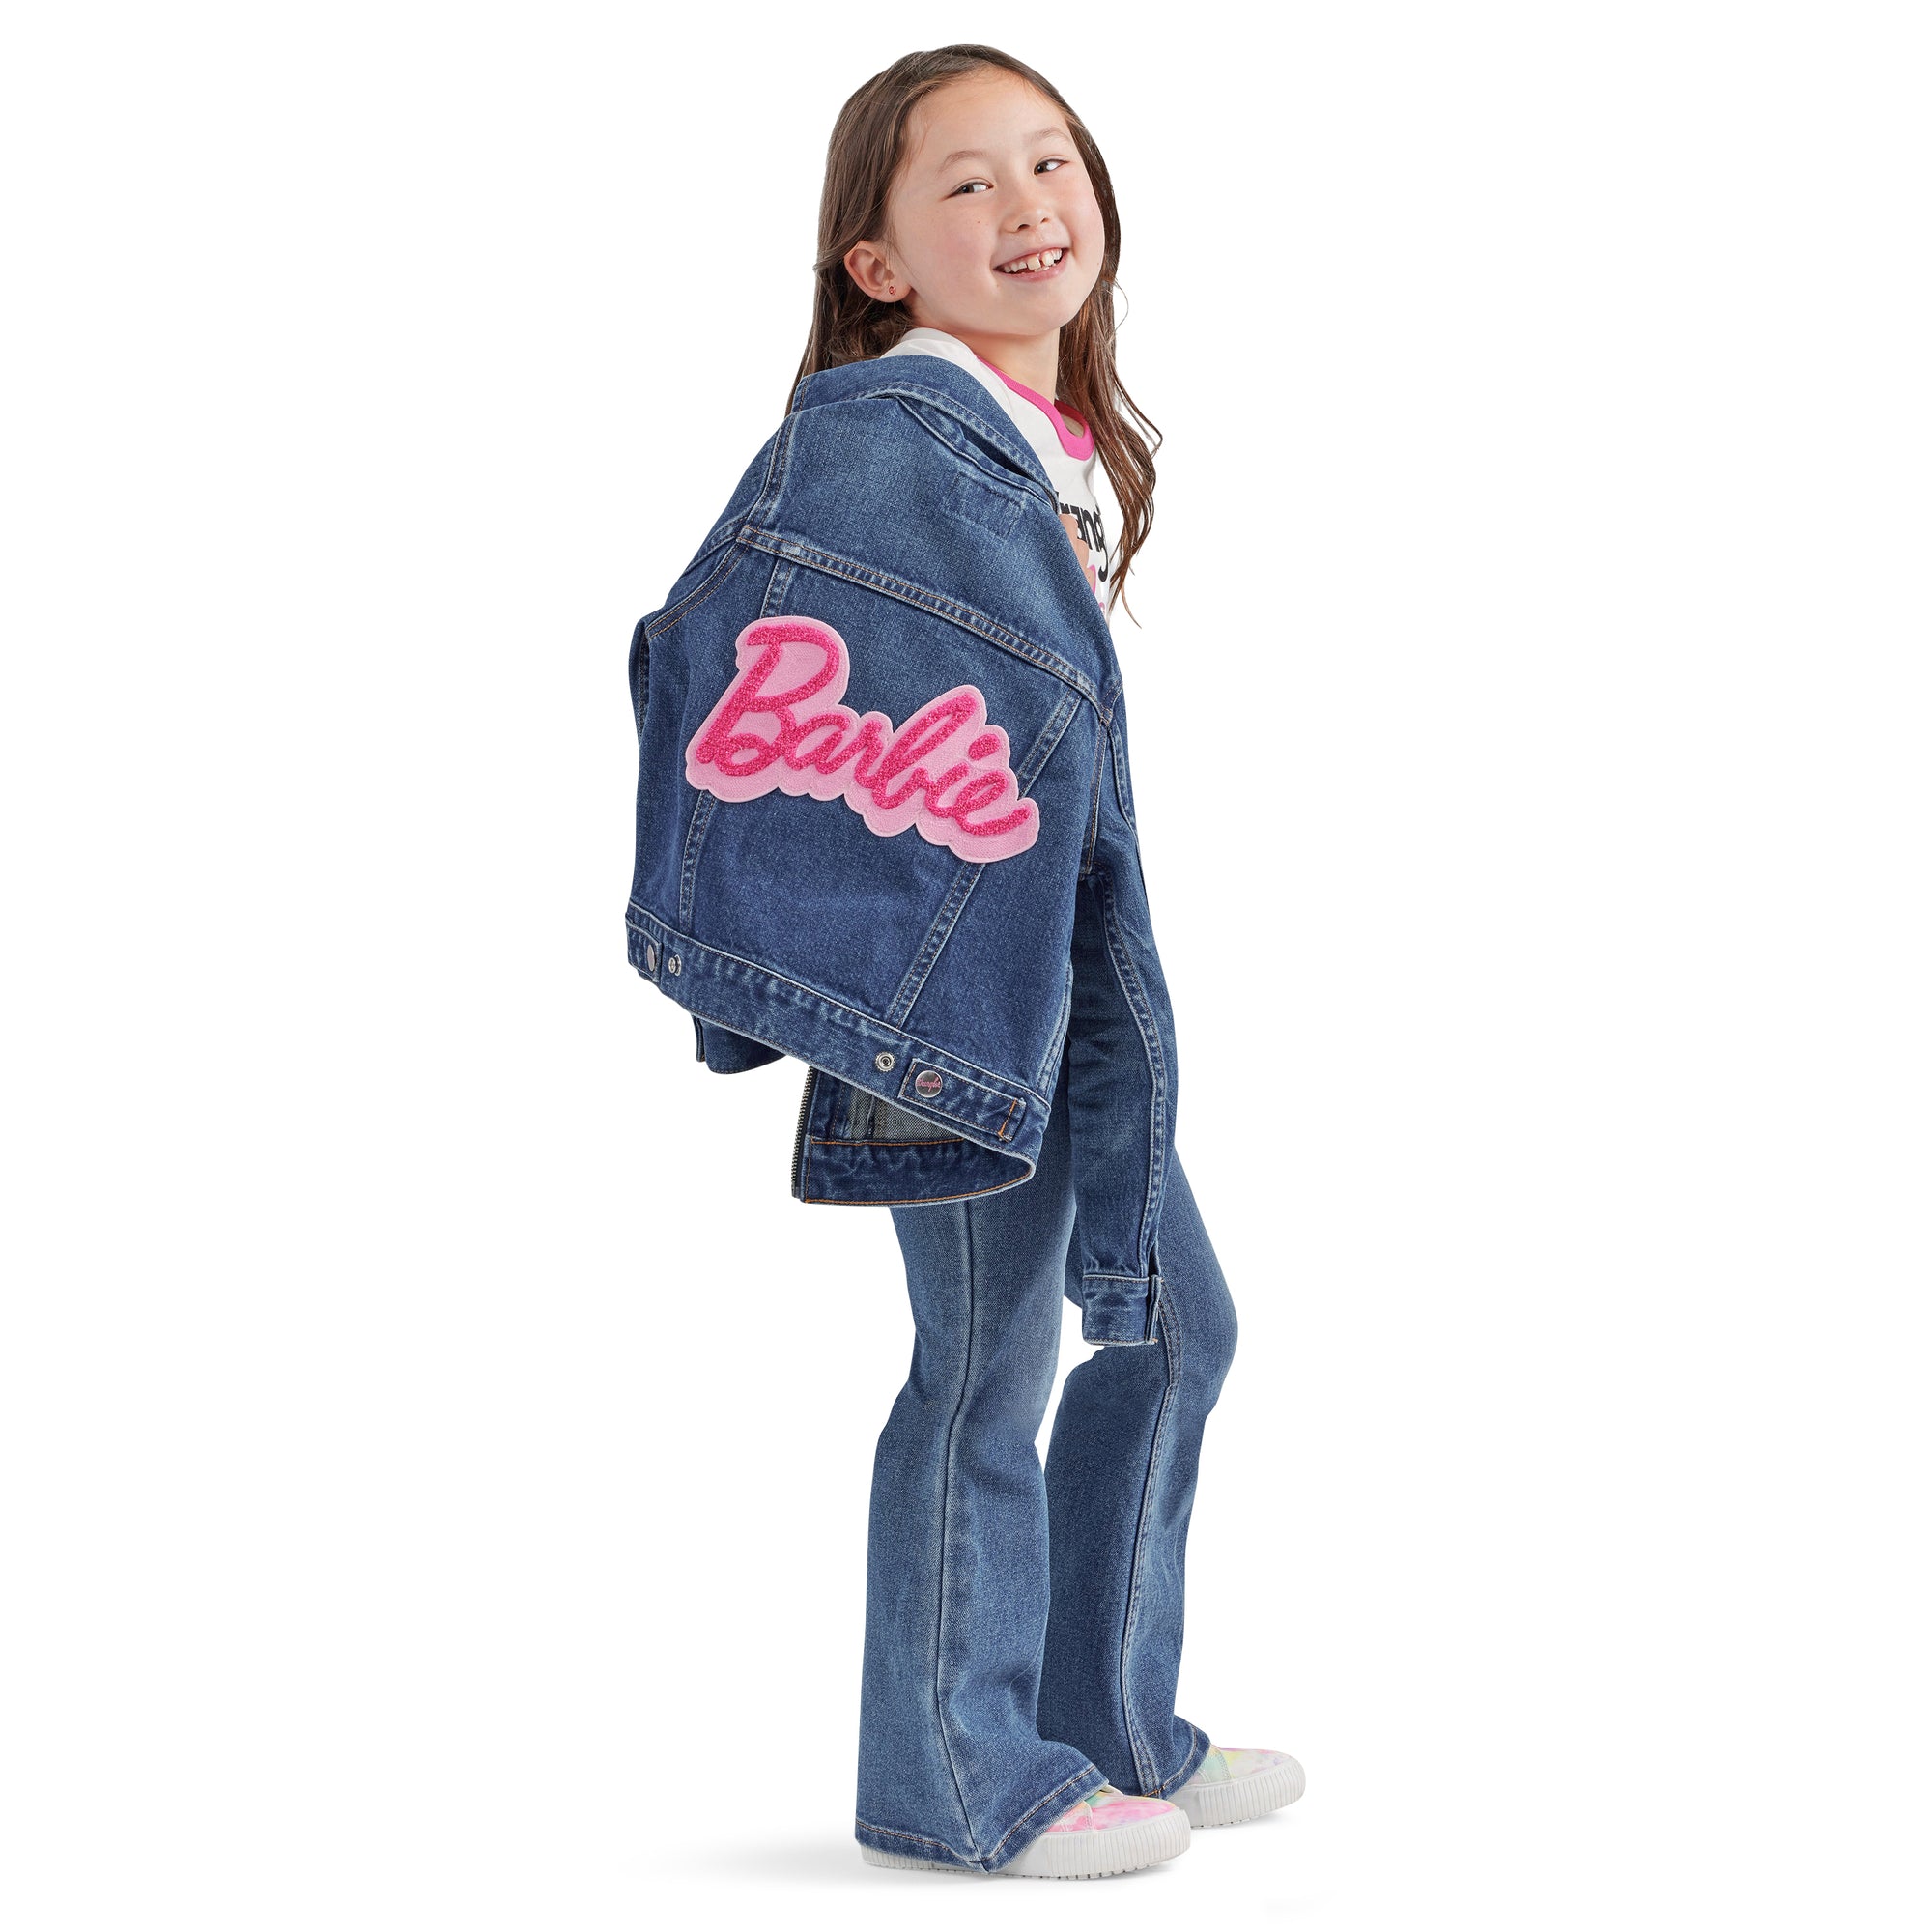 Wrangler X Barbie Girl's Barbie Logo Denim Jacket, Denim Blue